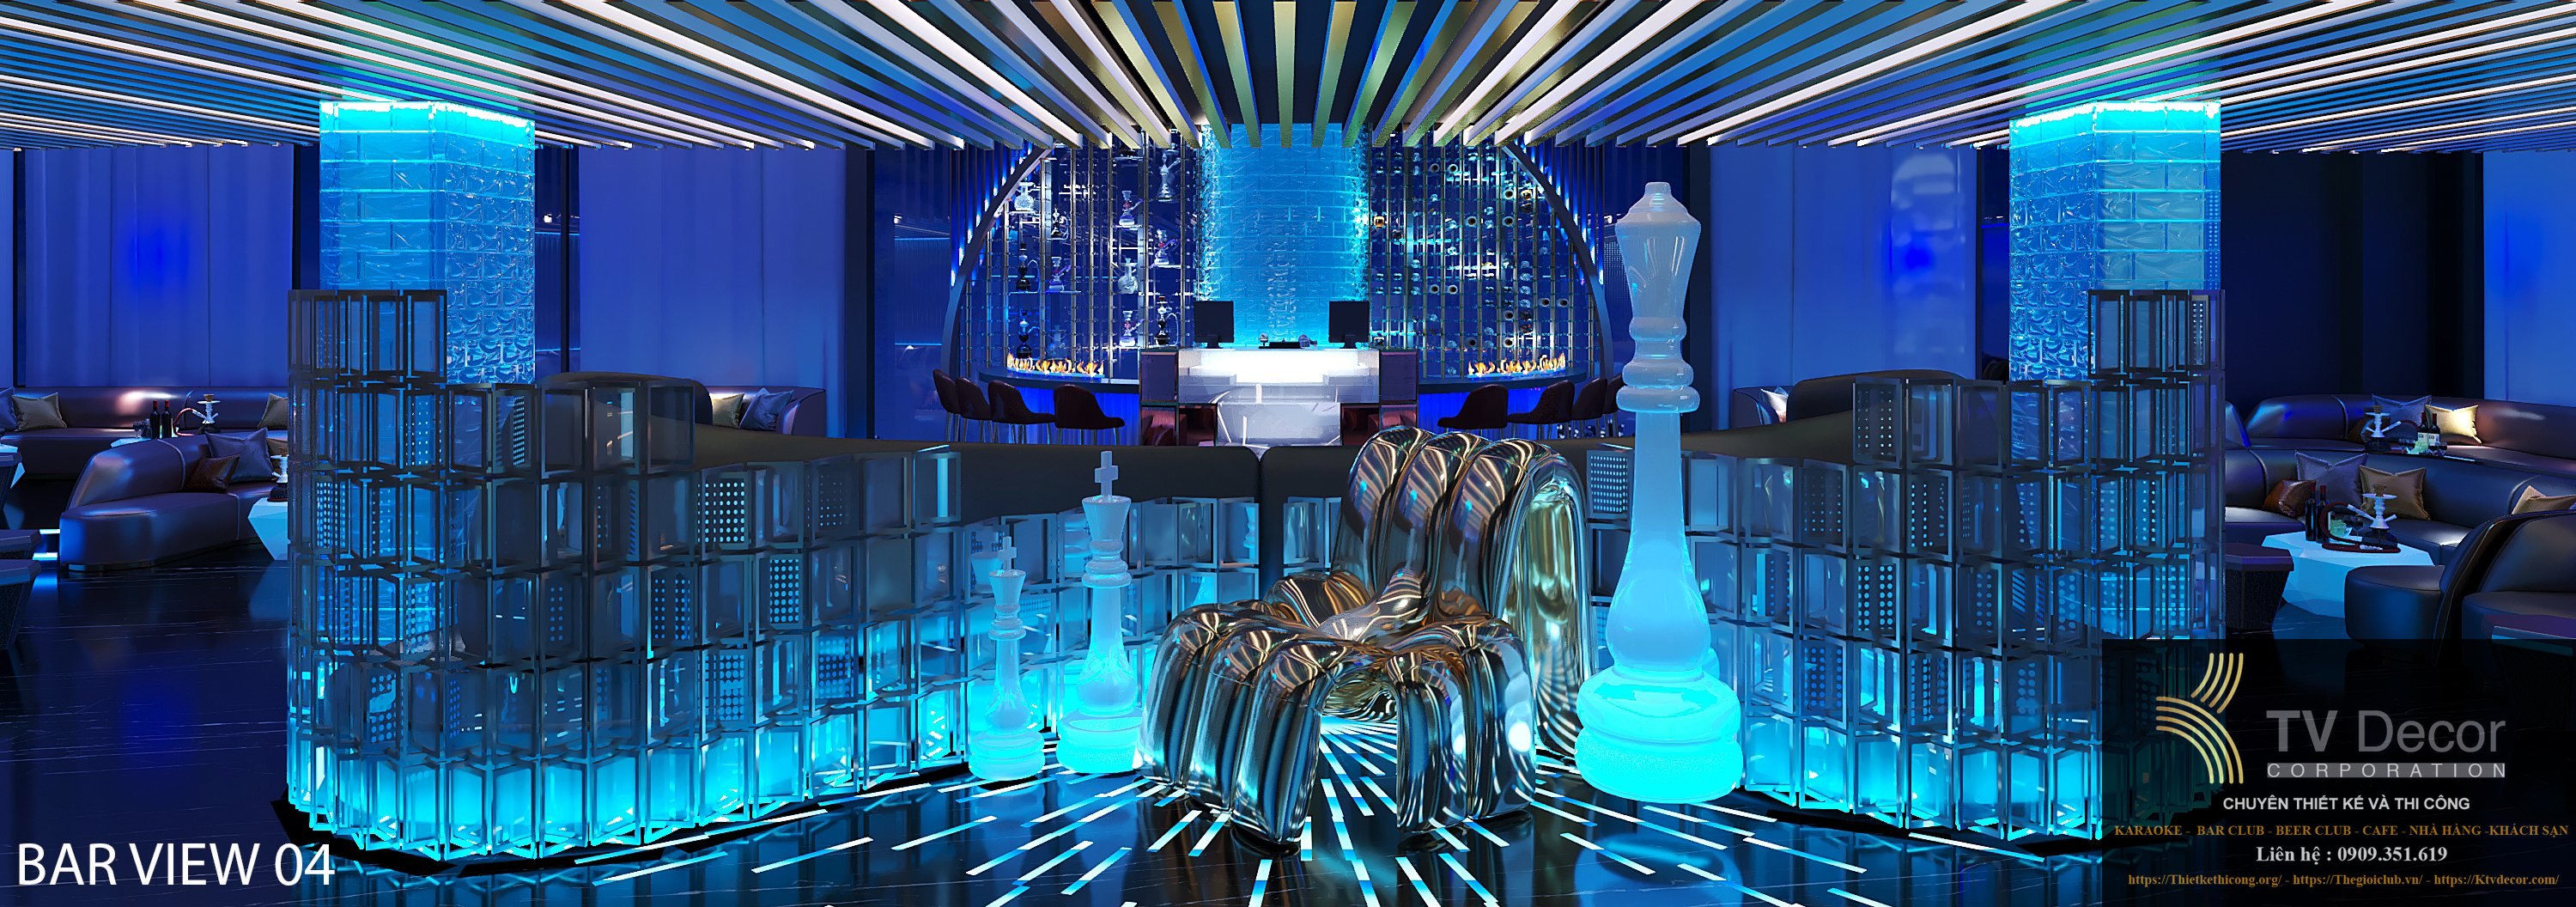 Thiết kế Lounge Bar Club tại TPHCM 5